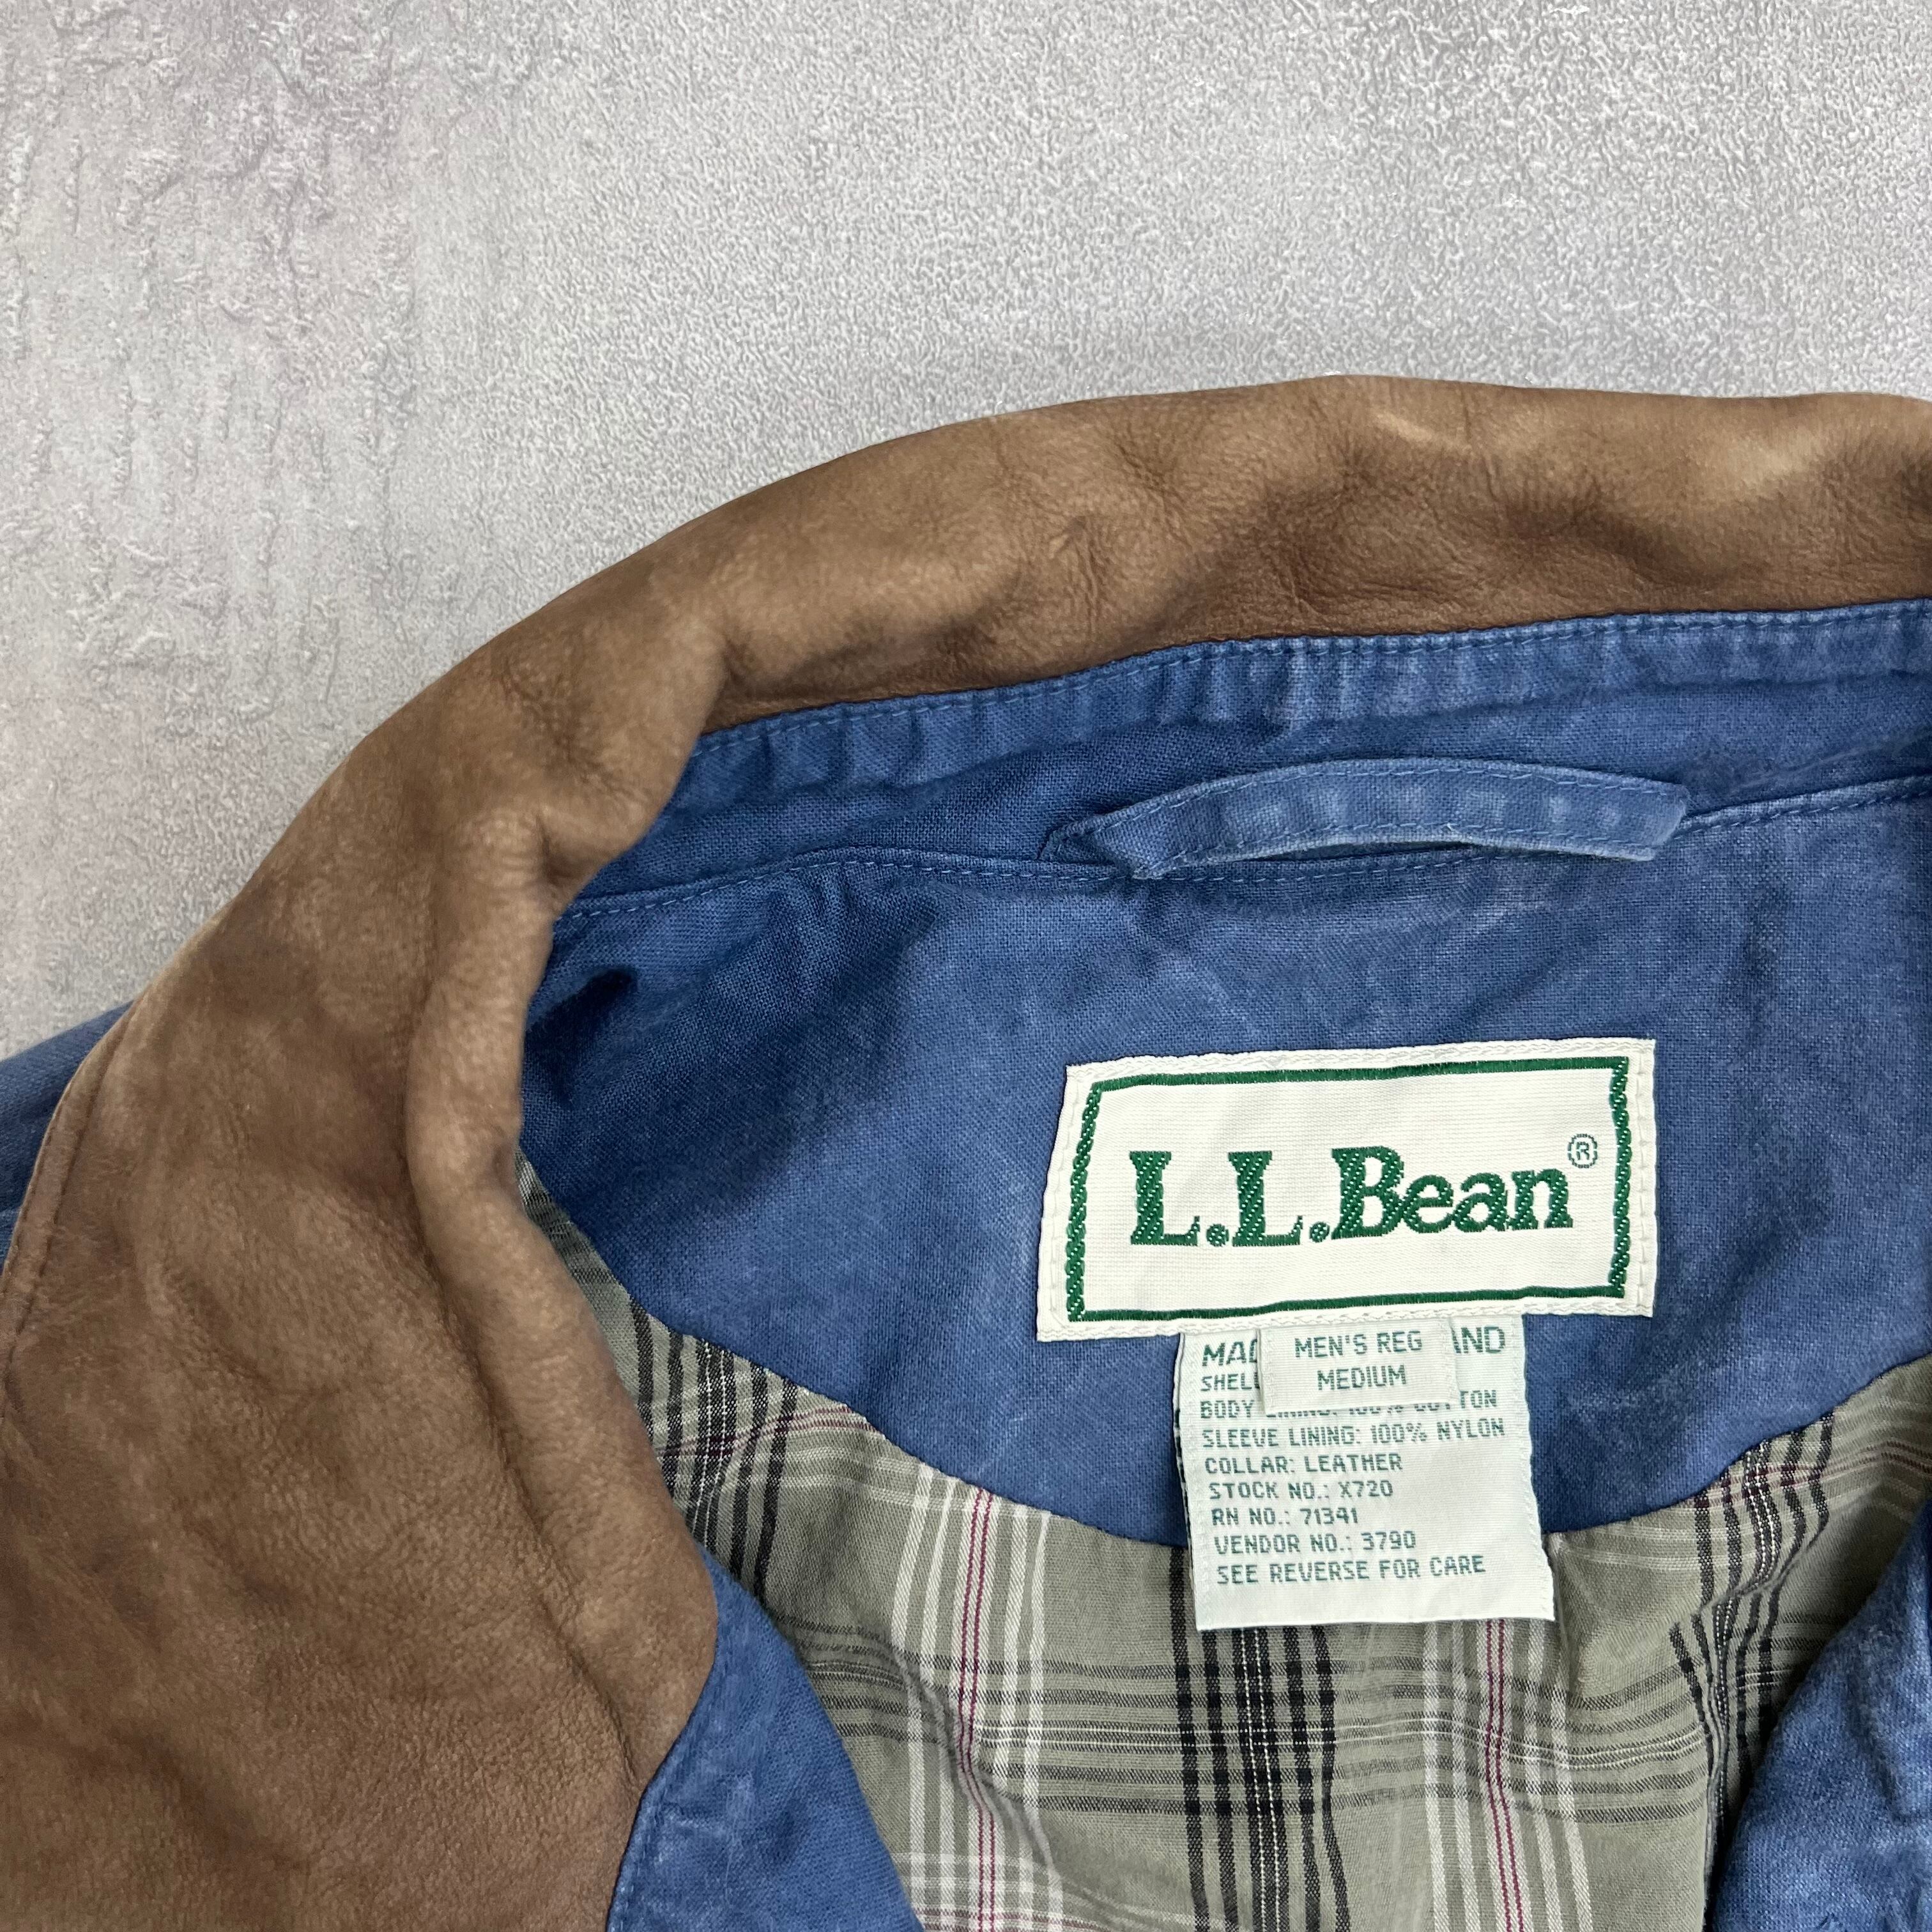 L.L.Bean hunting jacket ハンティングジャケット 80s